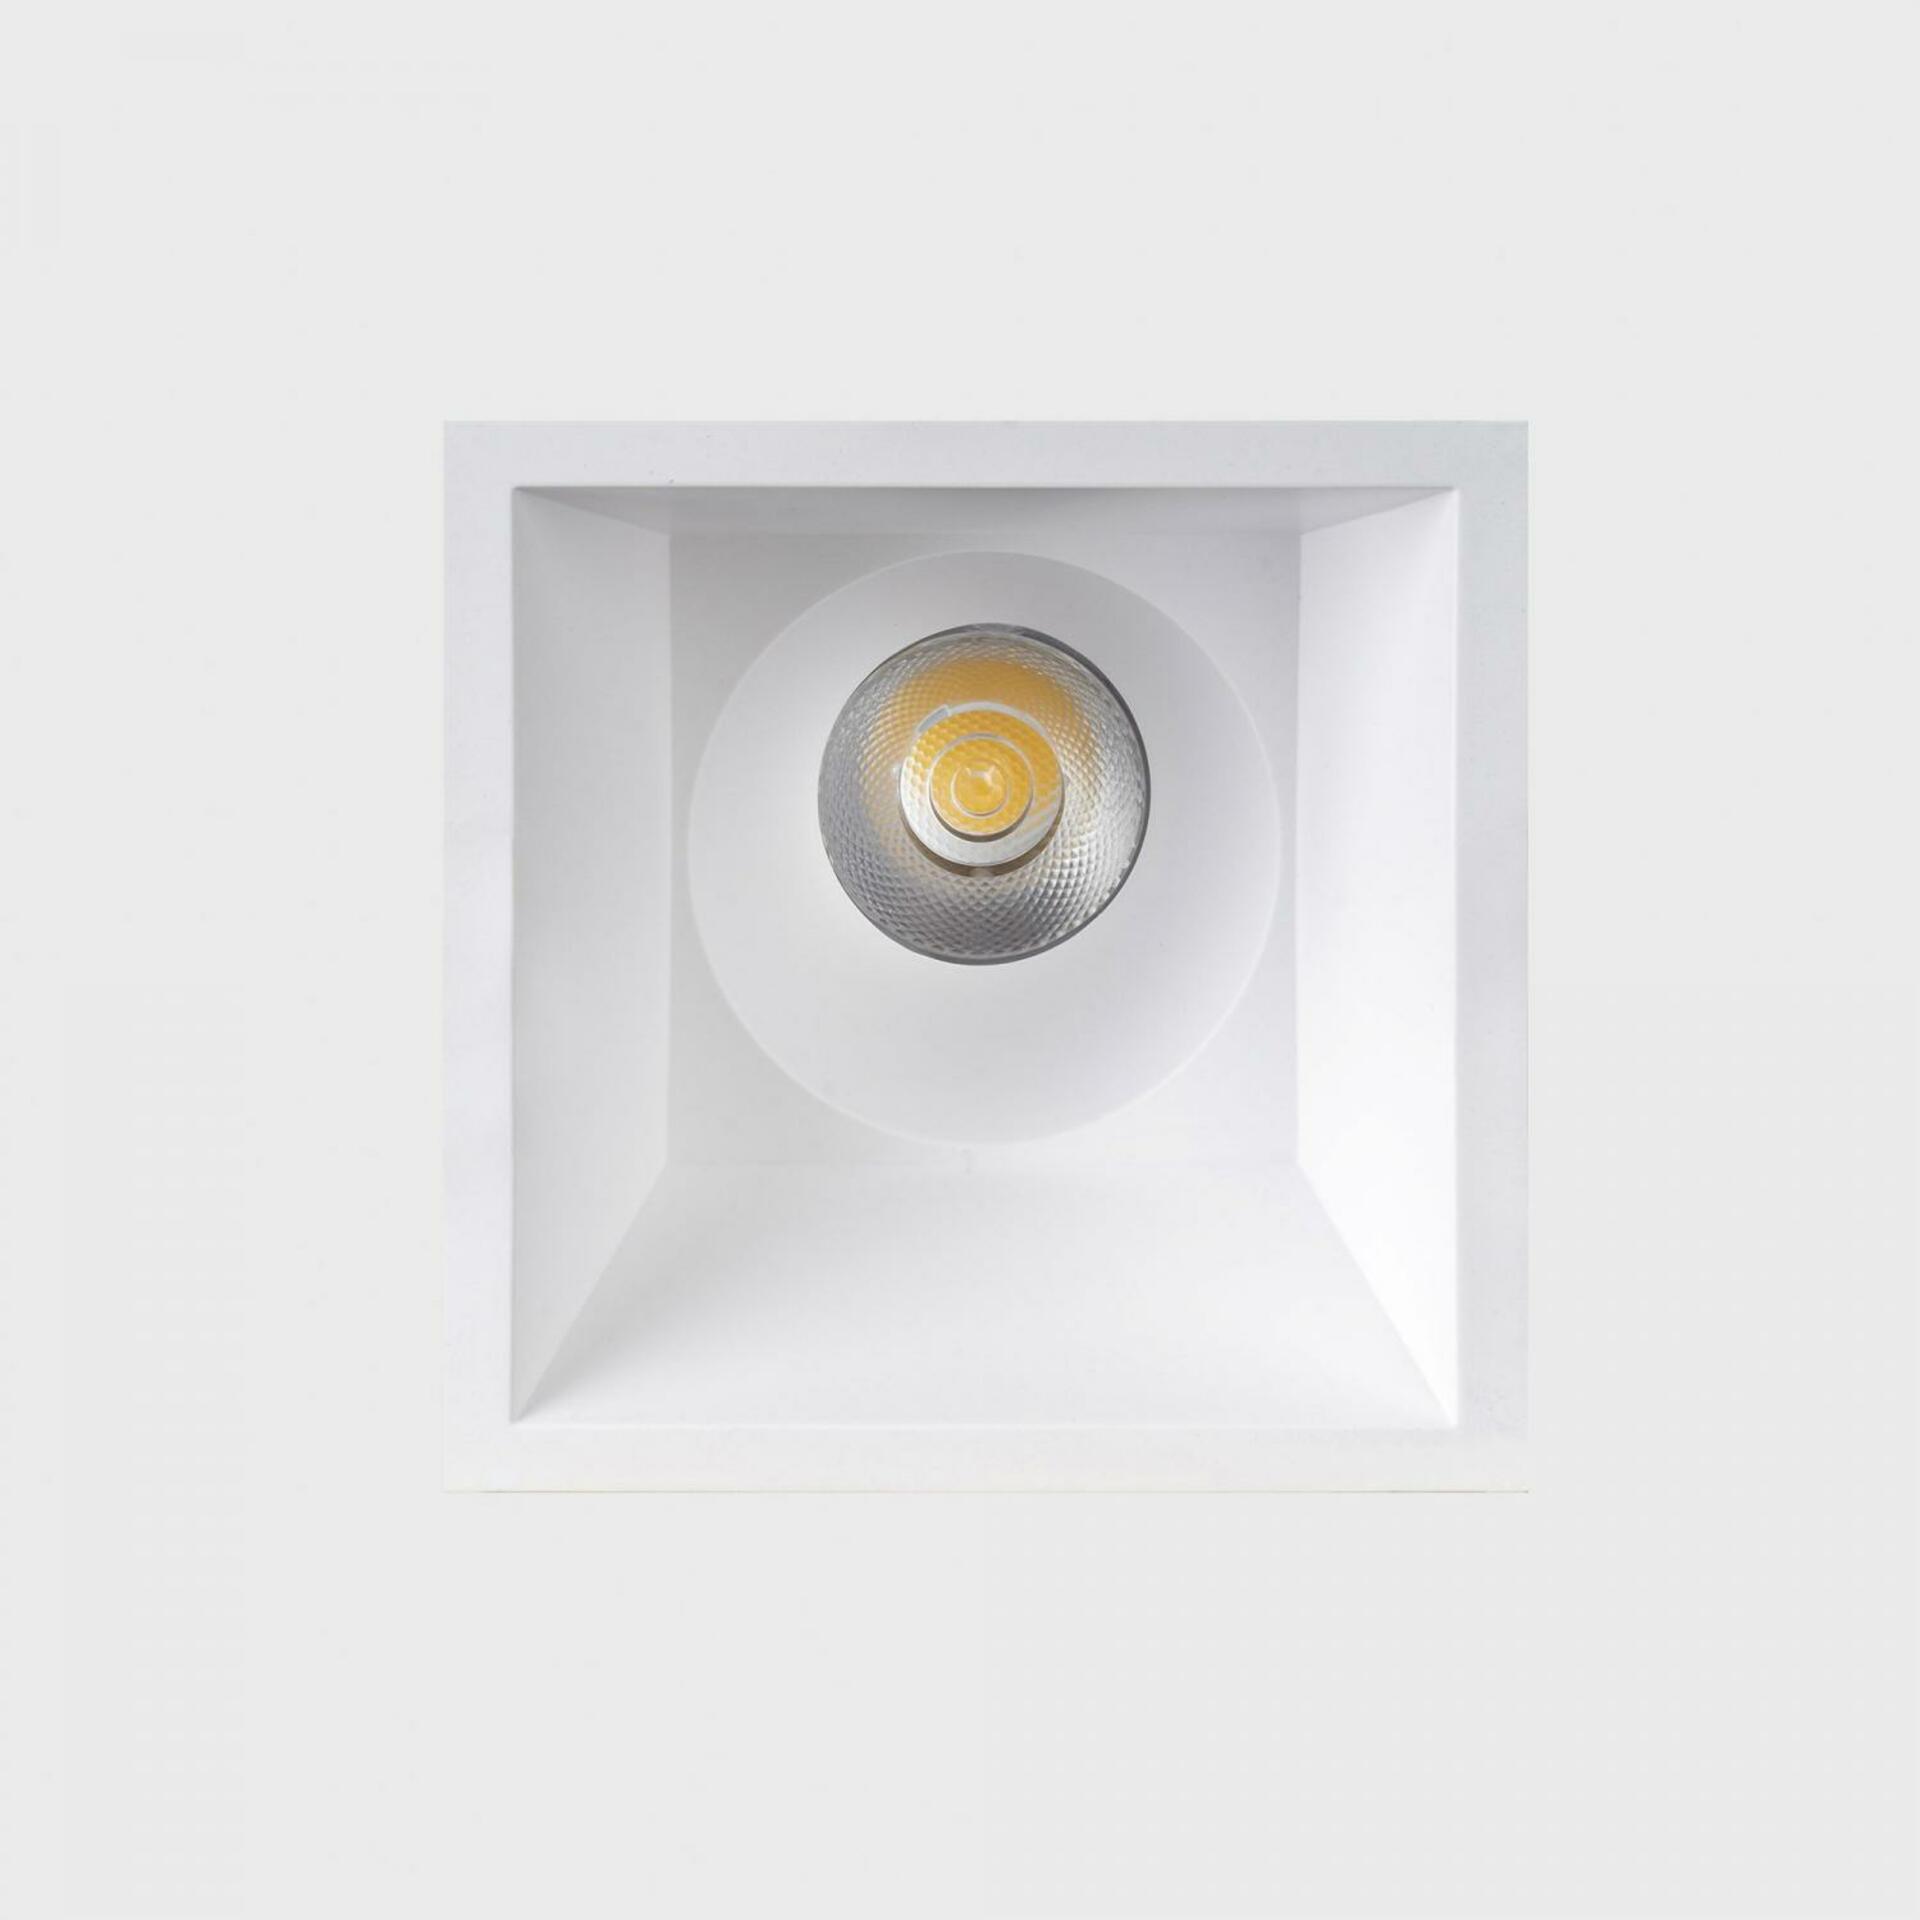 KOHL LIGHTING KOHL-Lighting NOON SQ ASYMETRIC zapuštěné svítidlo s rámečkem 93x93 mm bílá 38° 5 W  CRI 80 3000K 1.10V